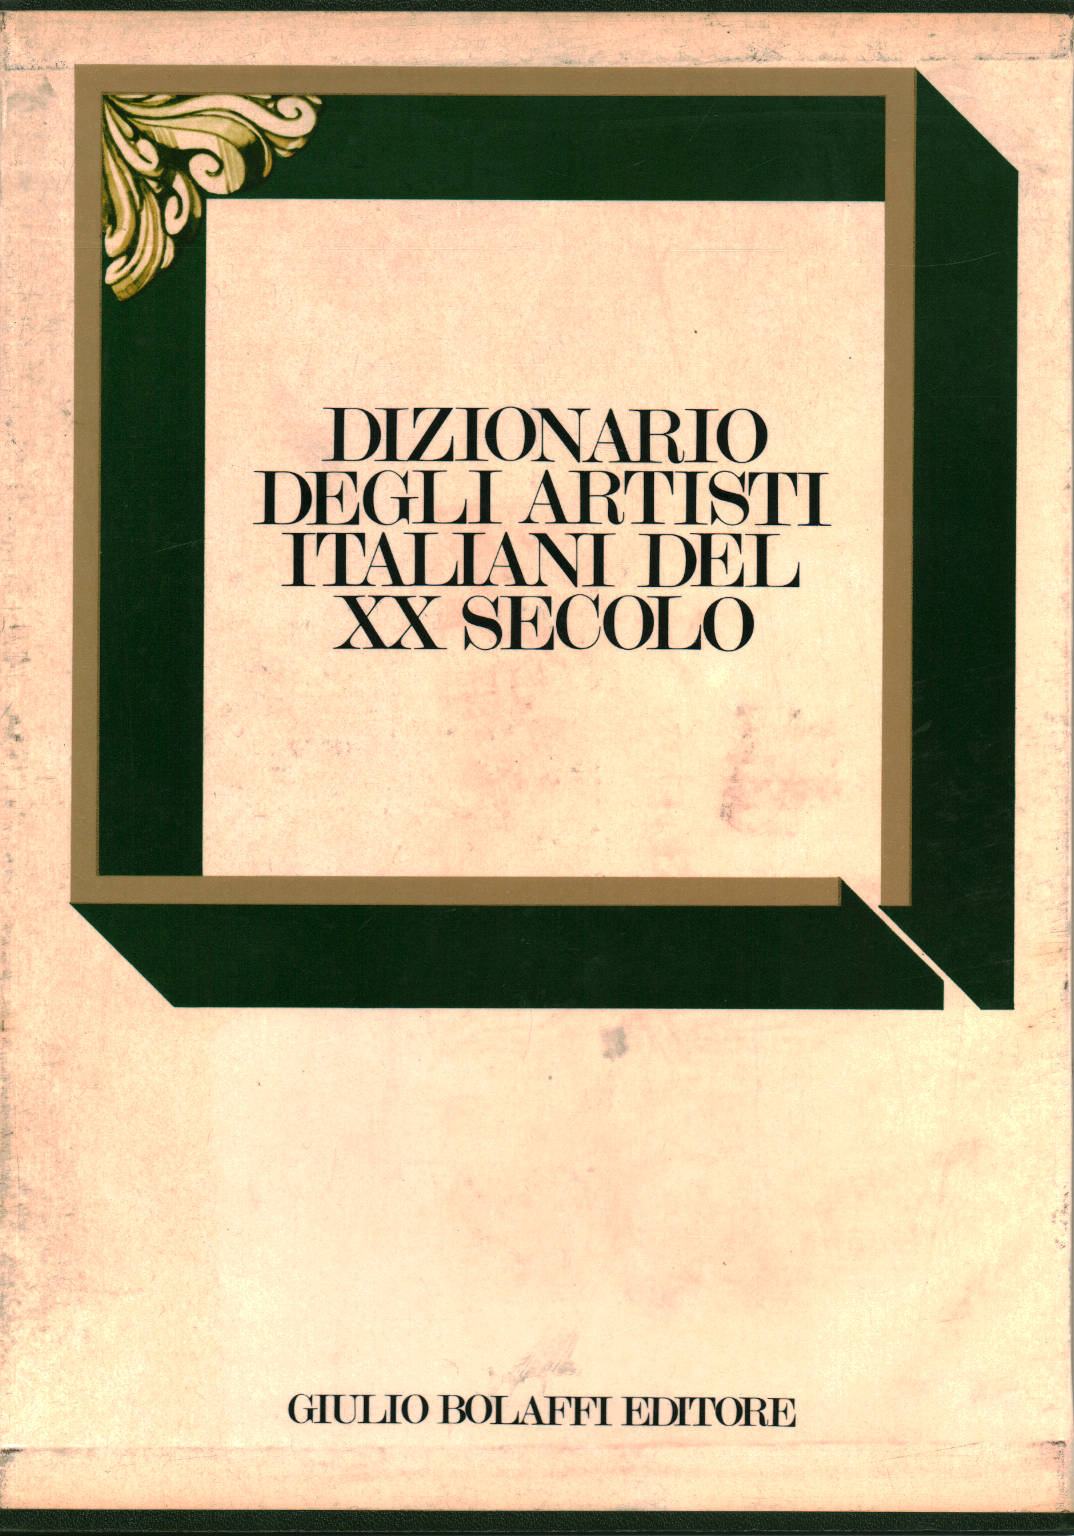 Dictionary of the Italian artists of the XX century (2, AA.VV.